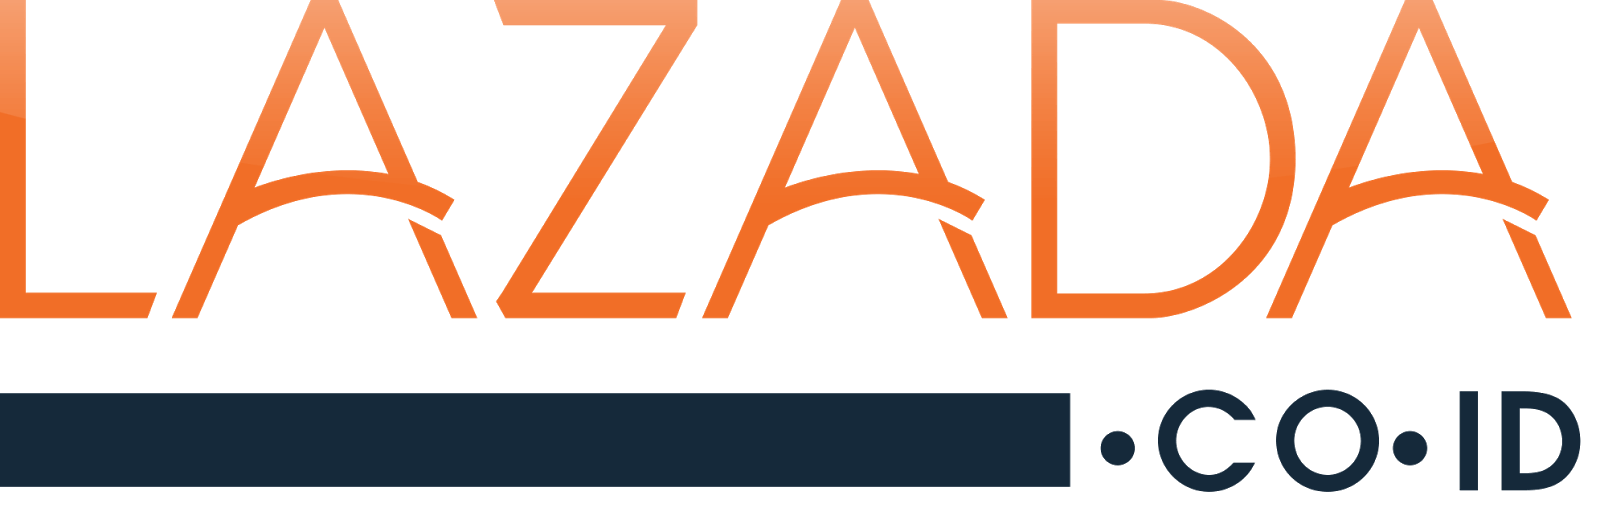 Lazada Logo - Logo Lazada - 237 Design